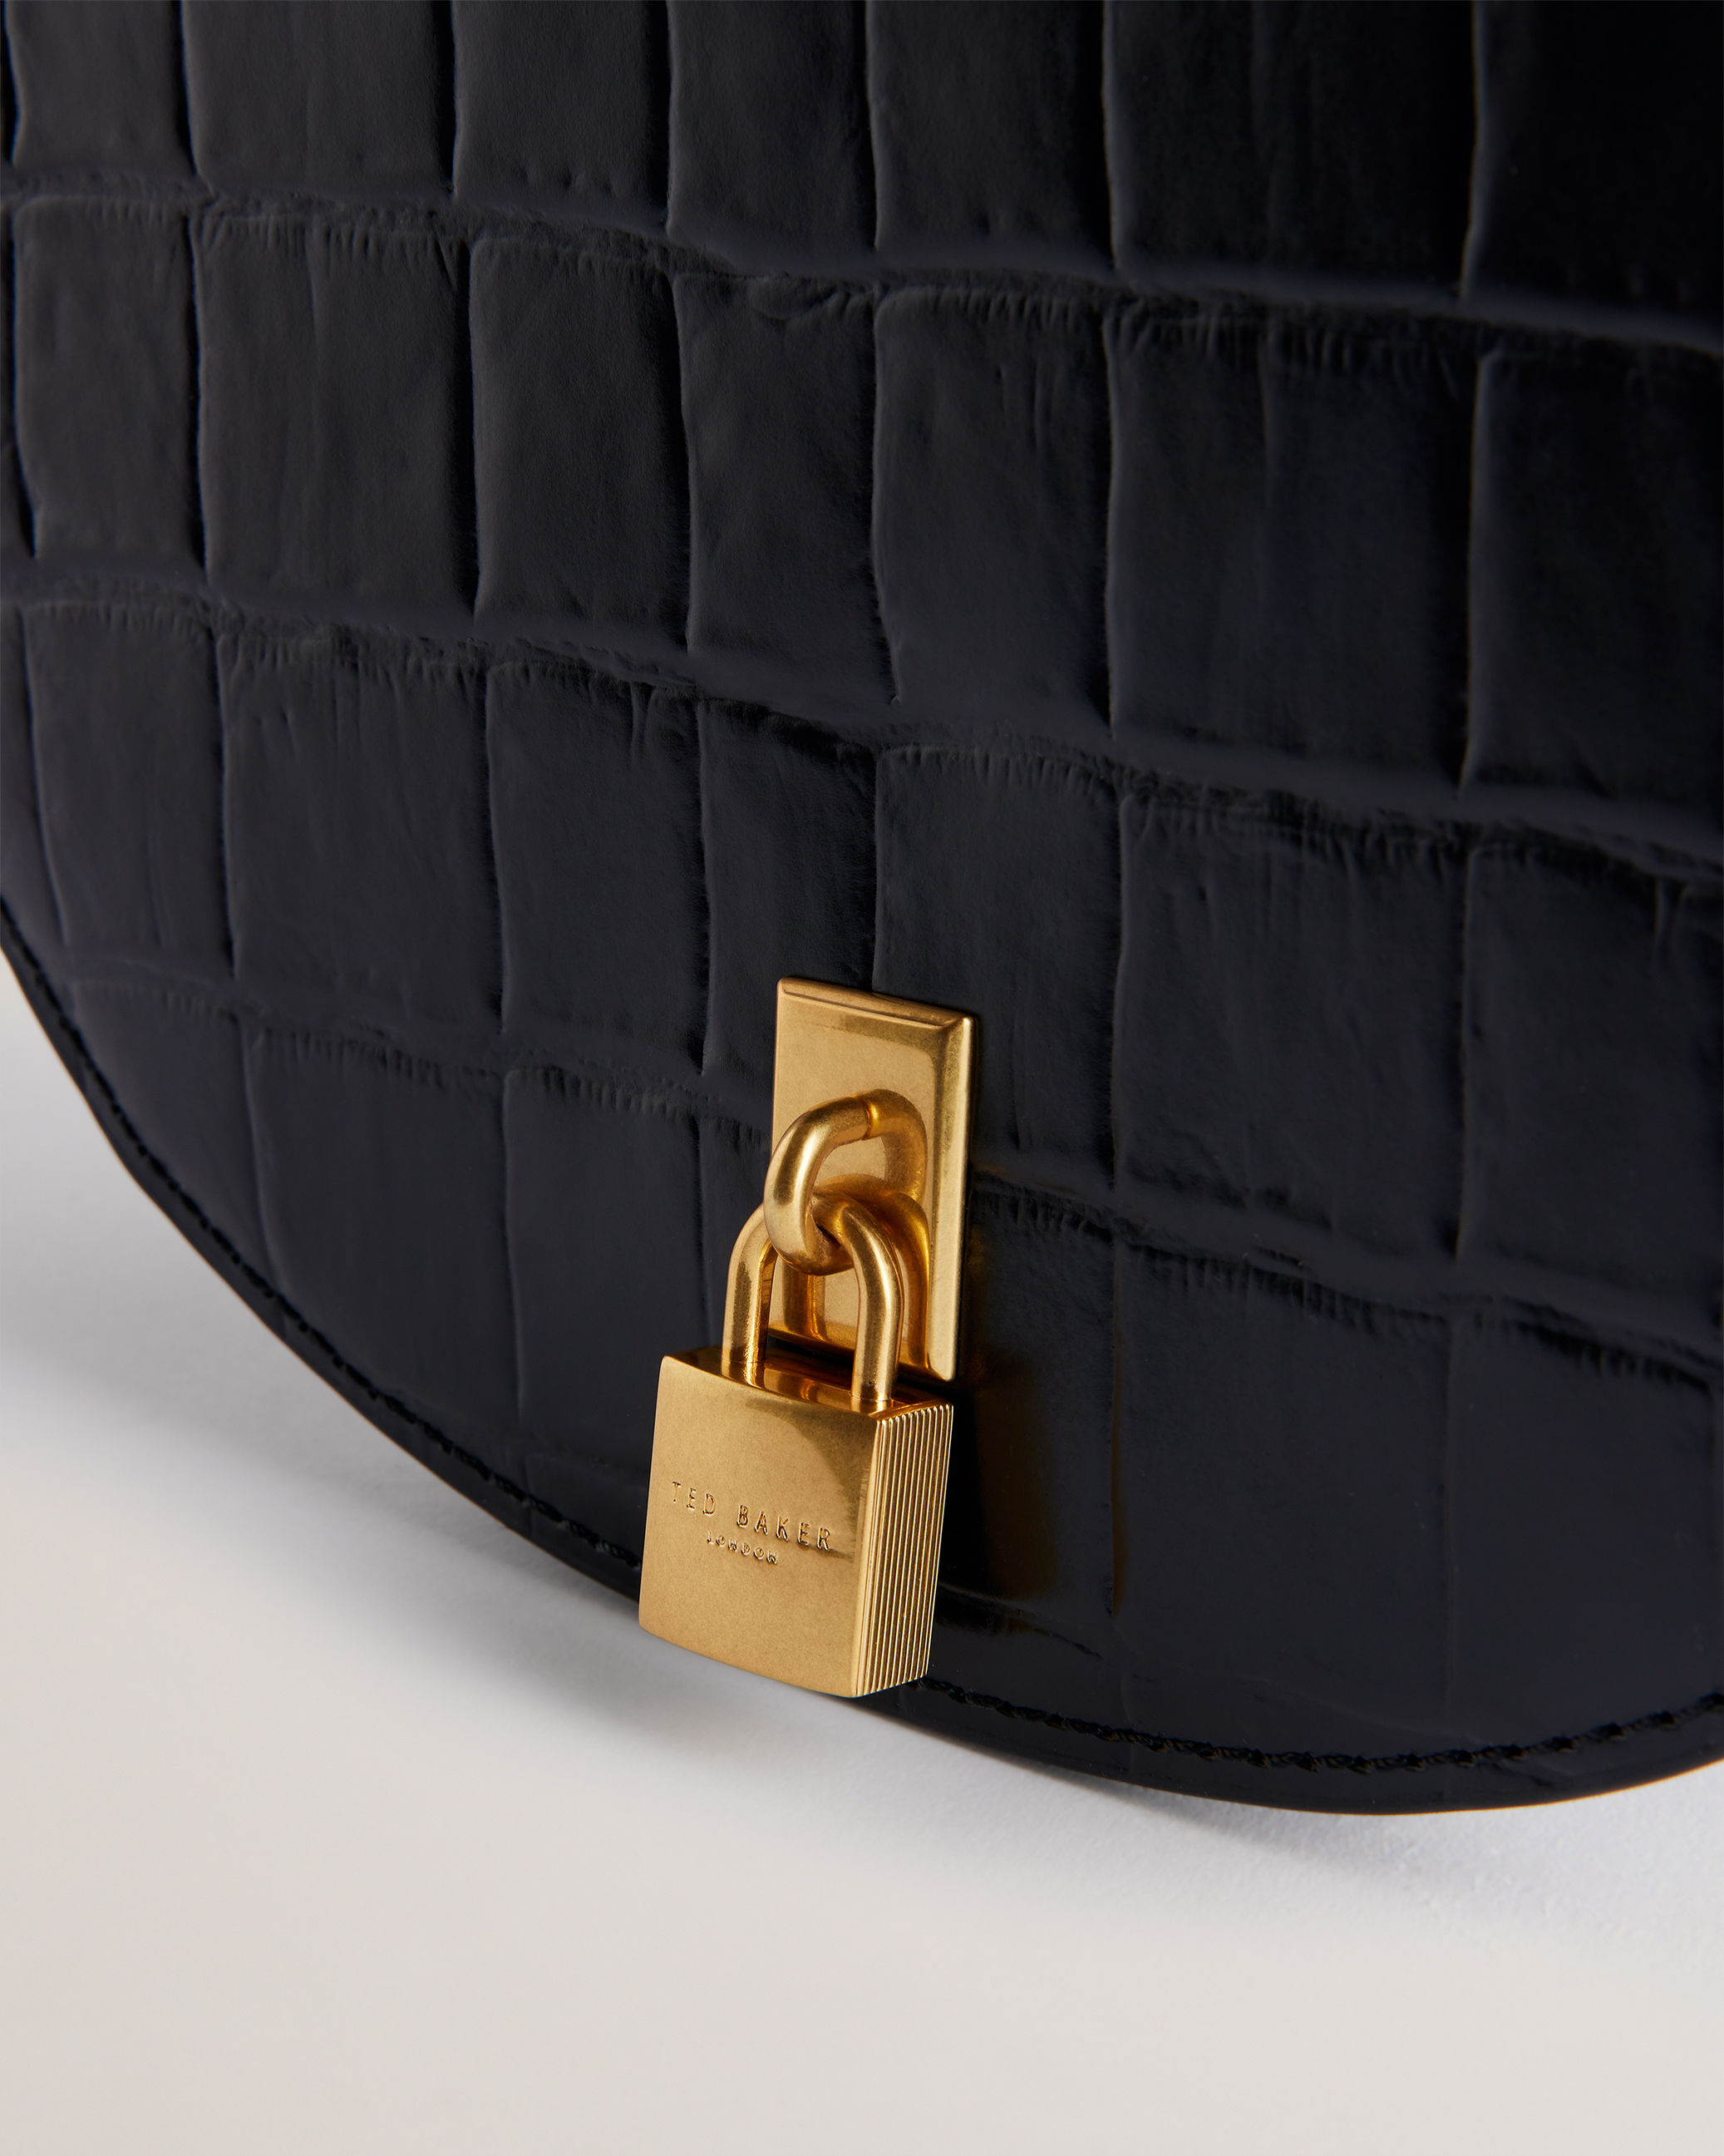 Handbags | Designer Bags | Women's Bags | Ted Baker ROW